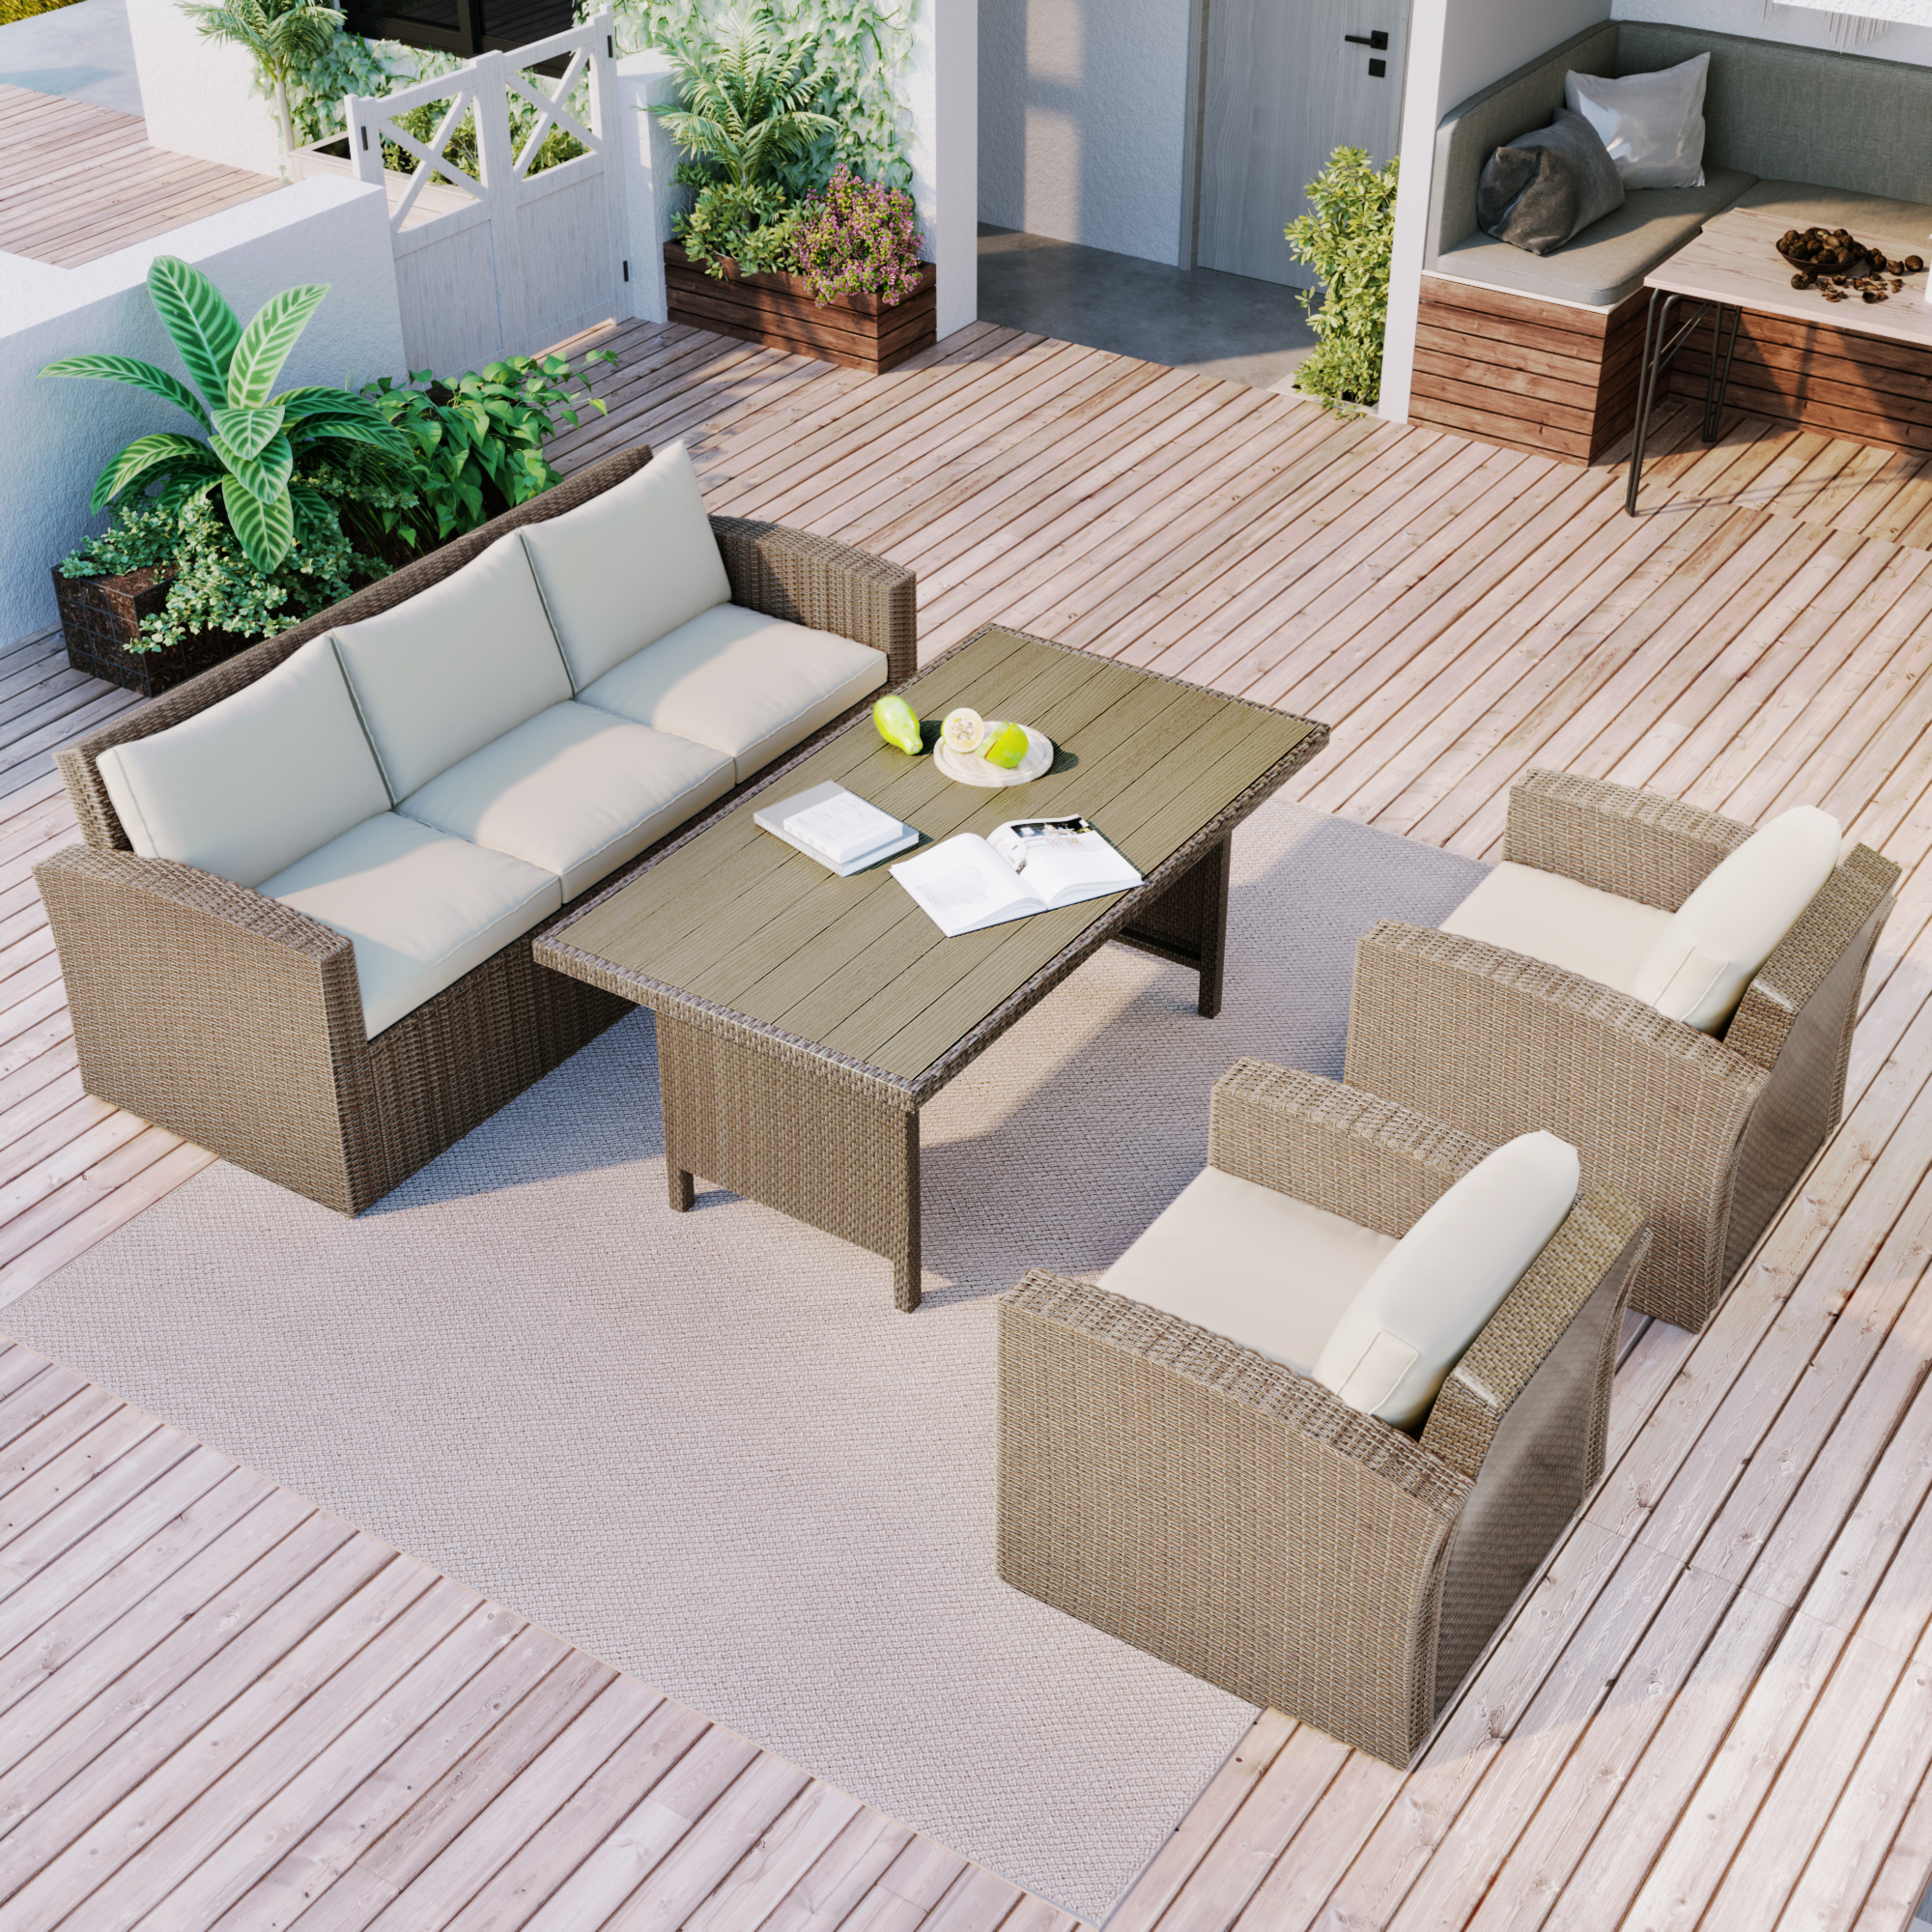 U_STYLE Outdoor Patio Furniture Set 4-Piece Conversation Set Wicker Furniture Sofa Set with Beige Cushions